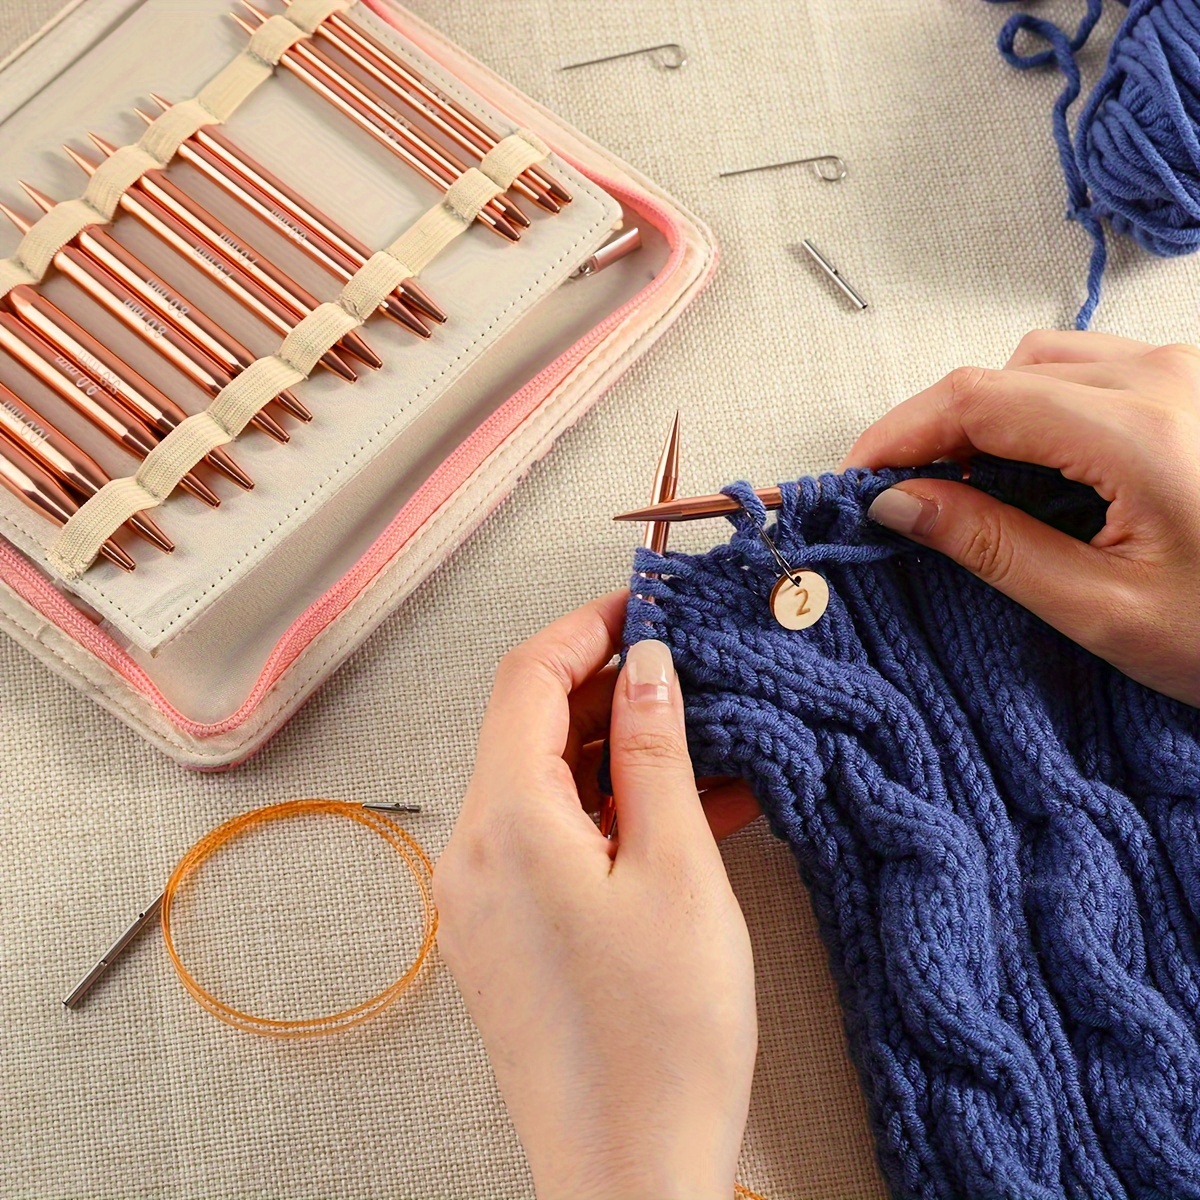 8PCS Aluminum Crochet hooks interchangeable knitting and crocheting  accessories hook and knitting bag yarn Crochet kit so weave